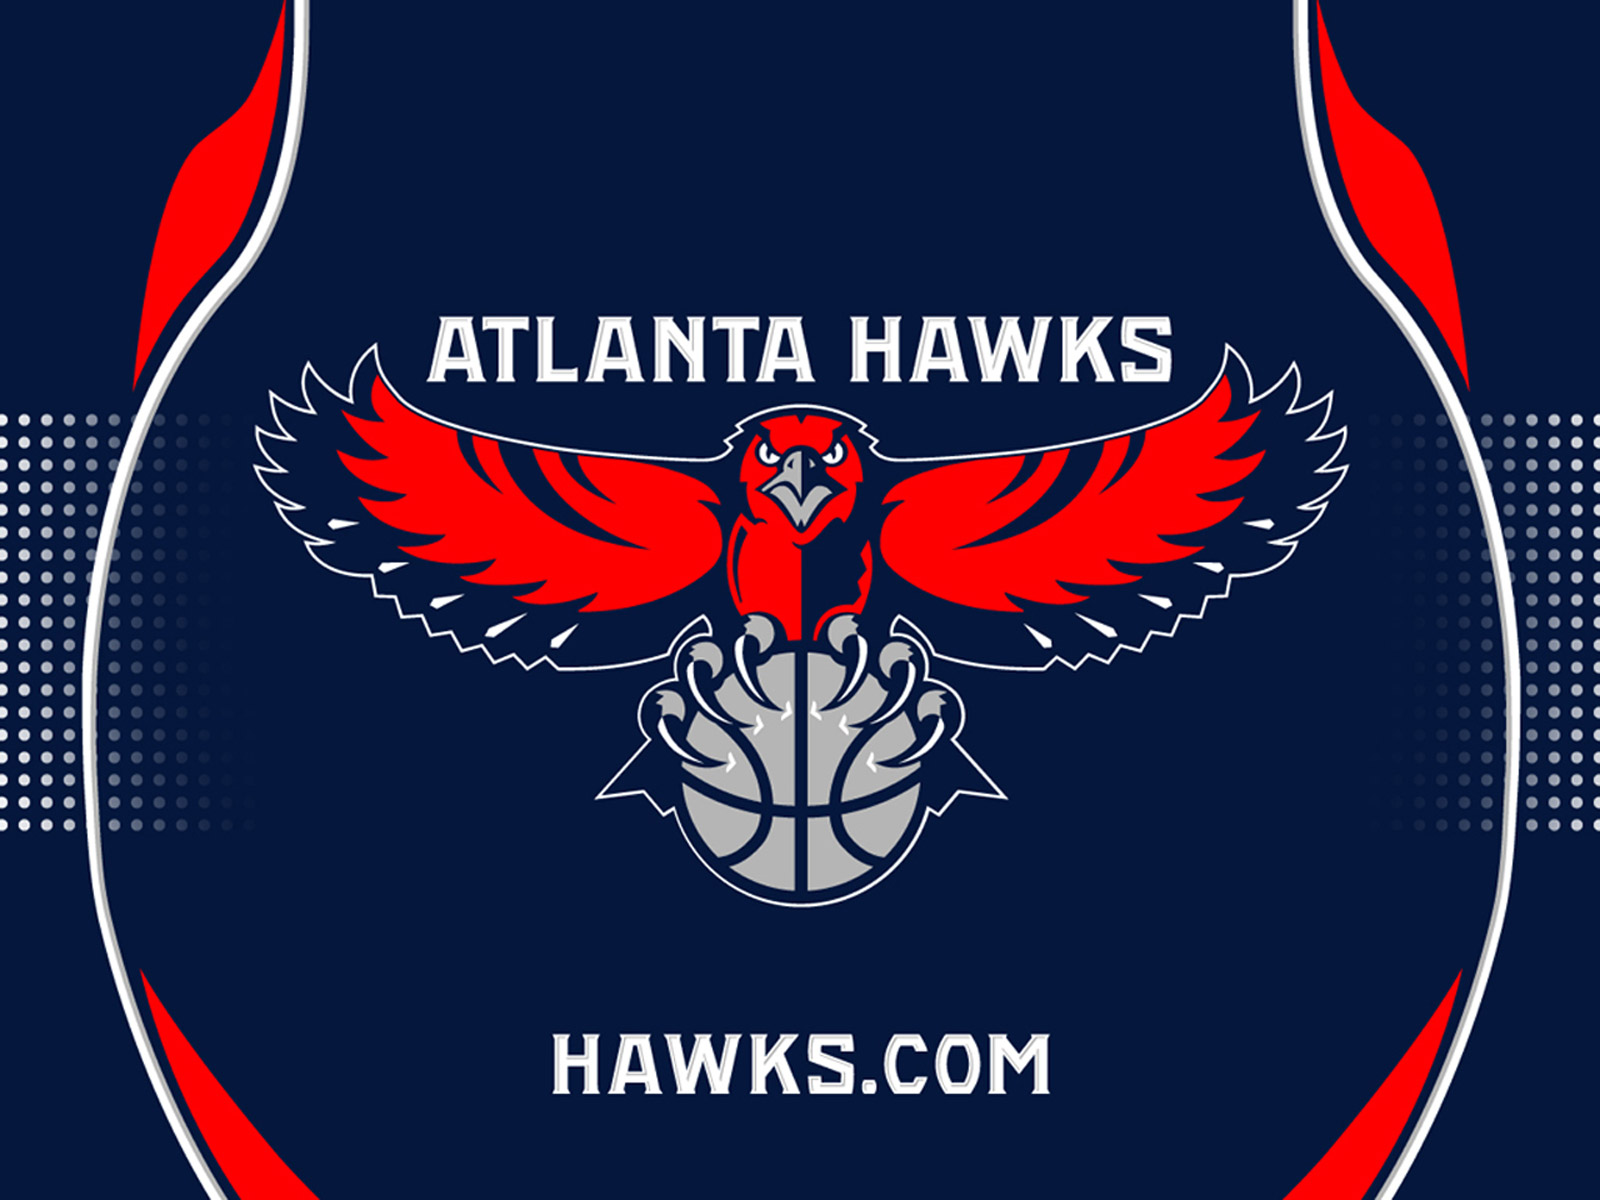 Jamal Crawford Hawks Widescreen Wallpaper  Basketball Wallpapers at